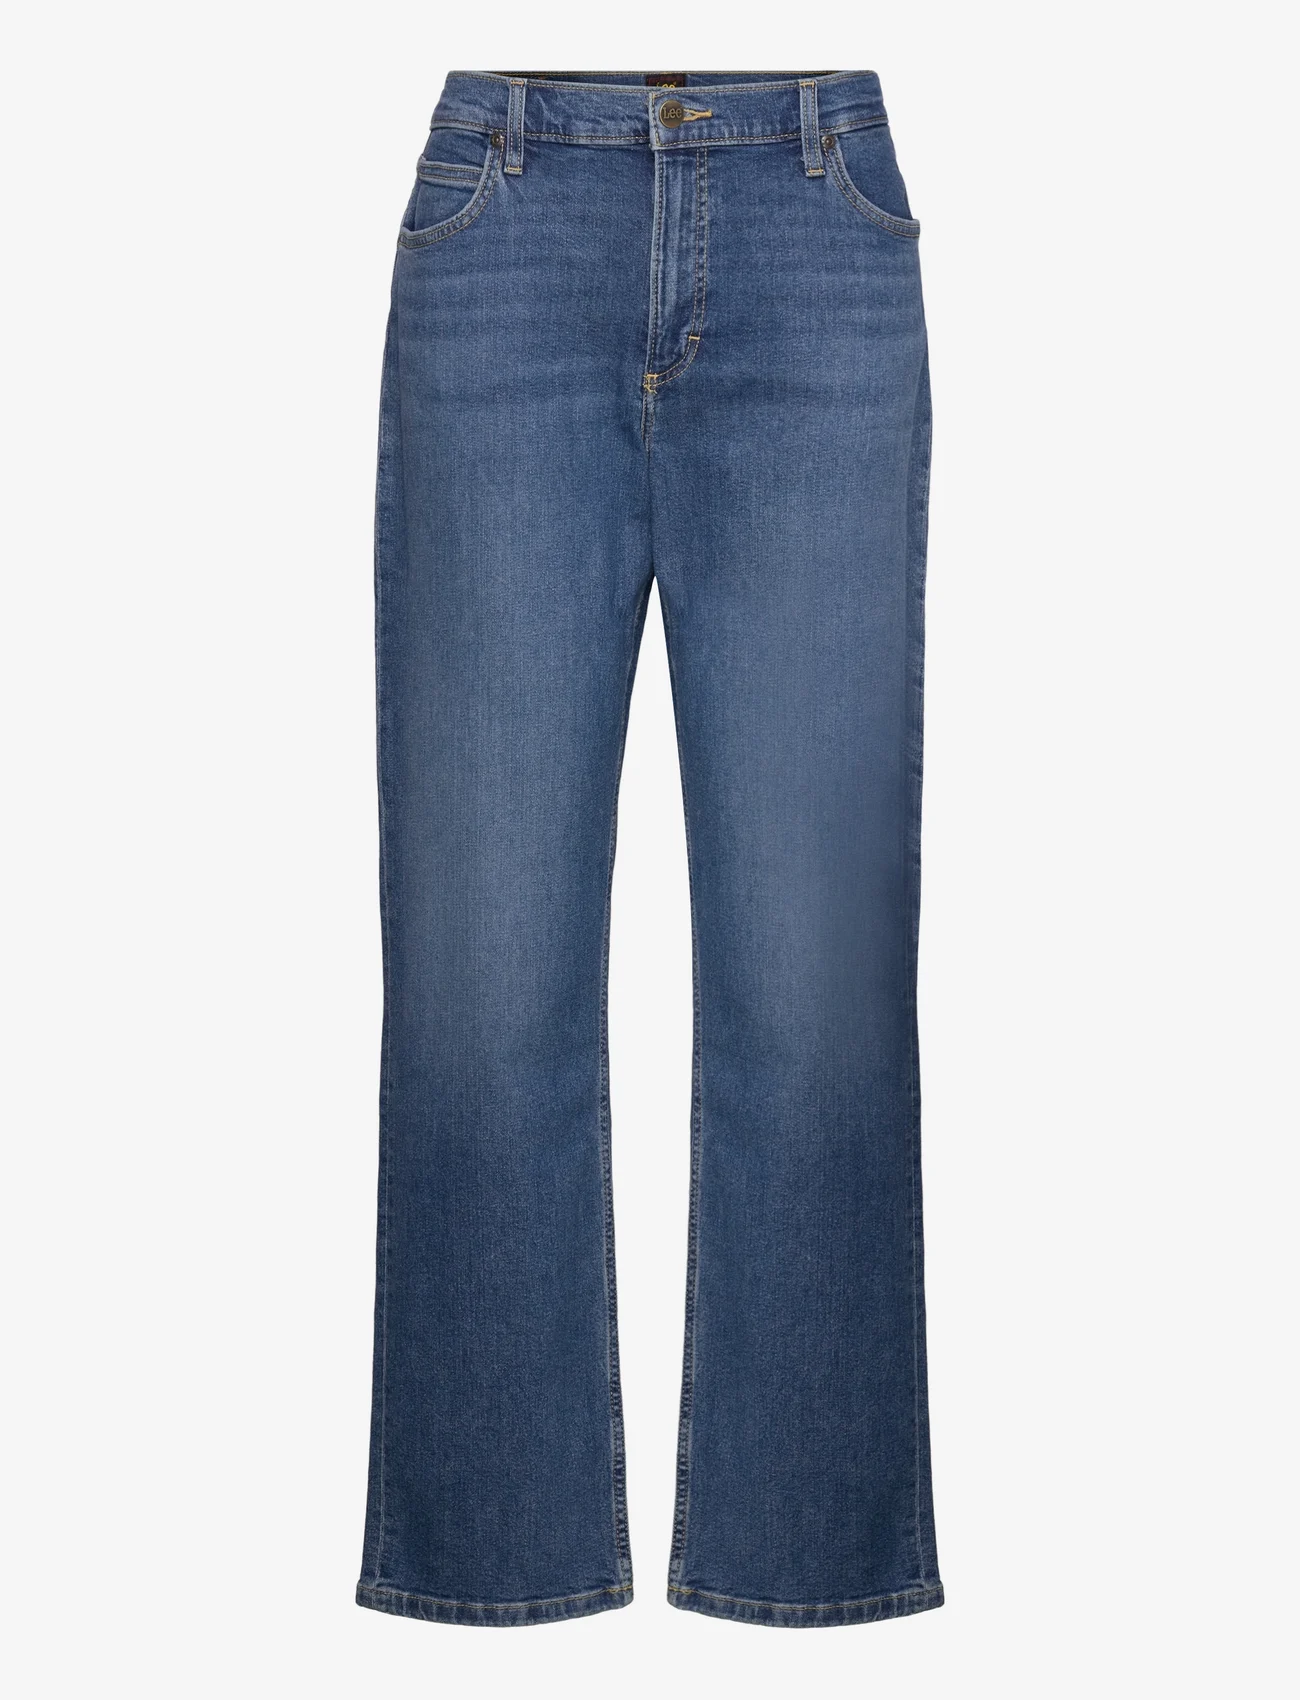 Lee Jeans - JANE - raka jeans - janet - 0